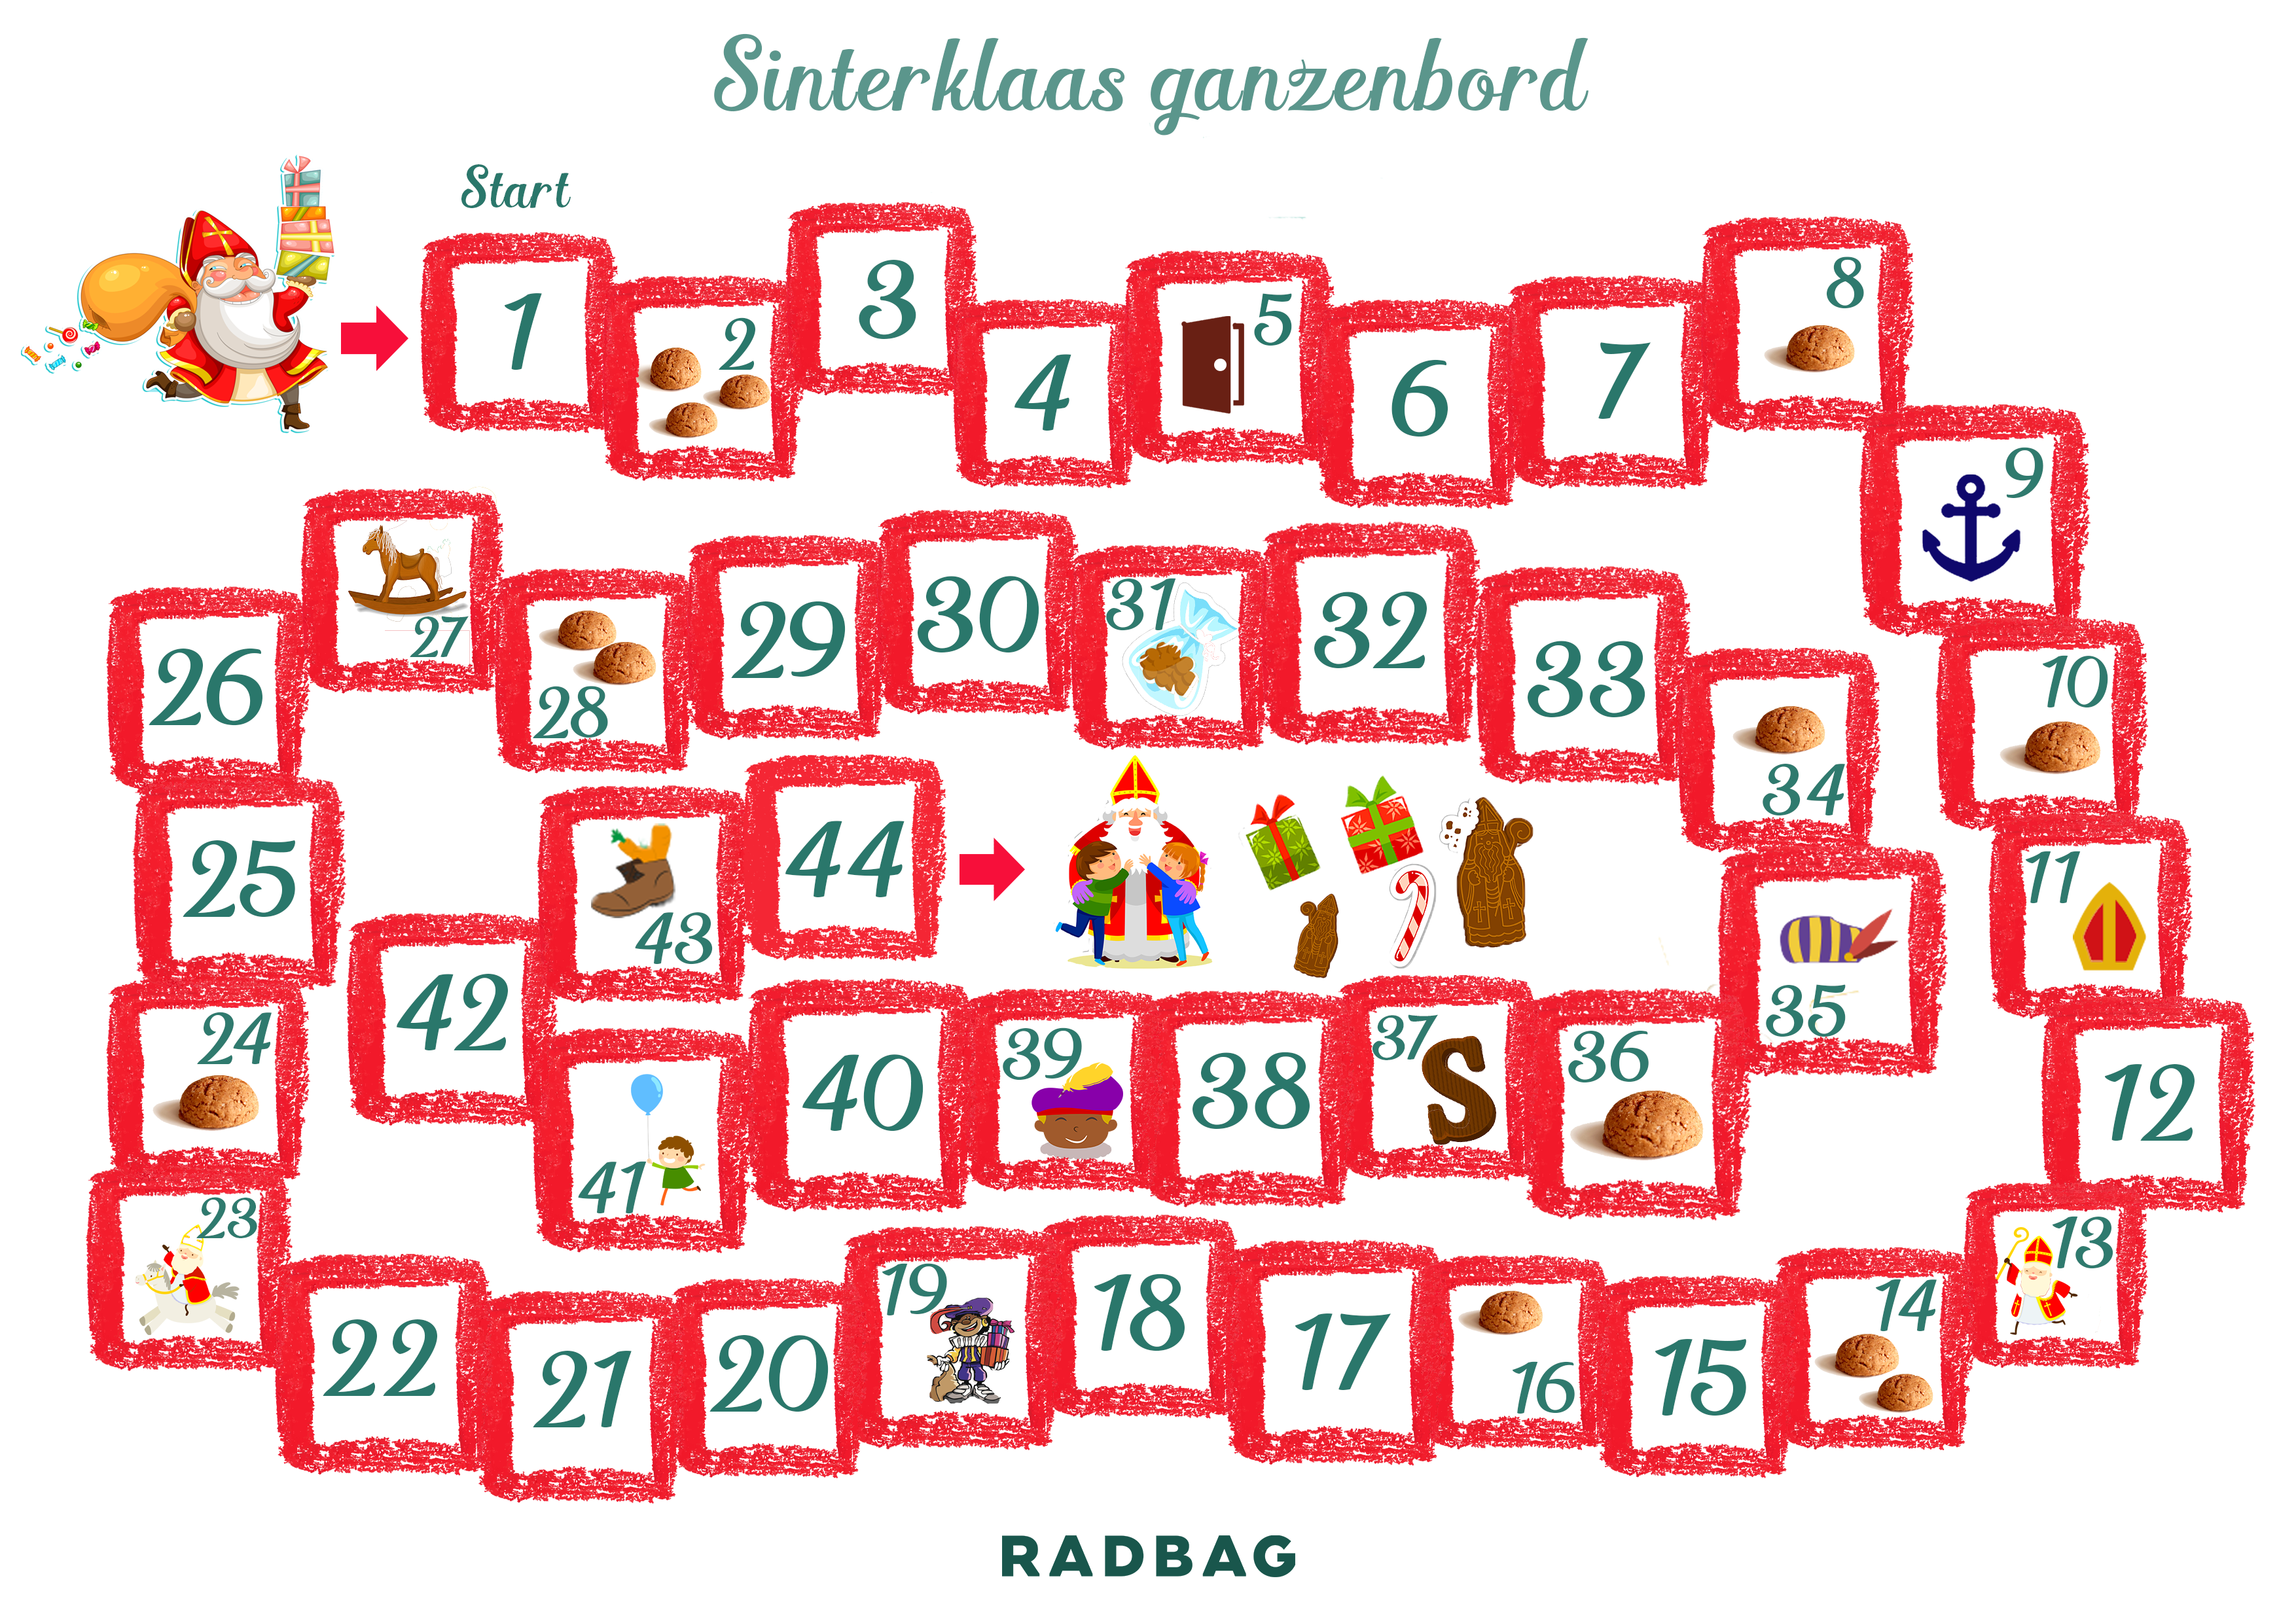 trainer maniac Soepel Het leukste Sinterklaas spel ganzenbord | Gratis printen